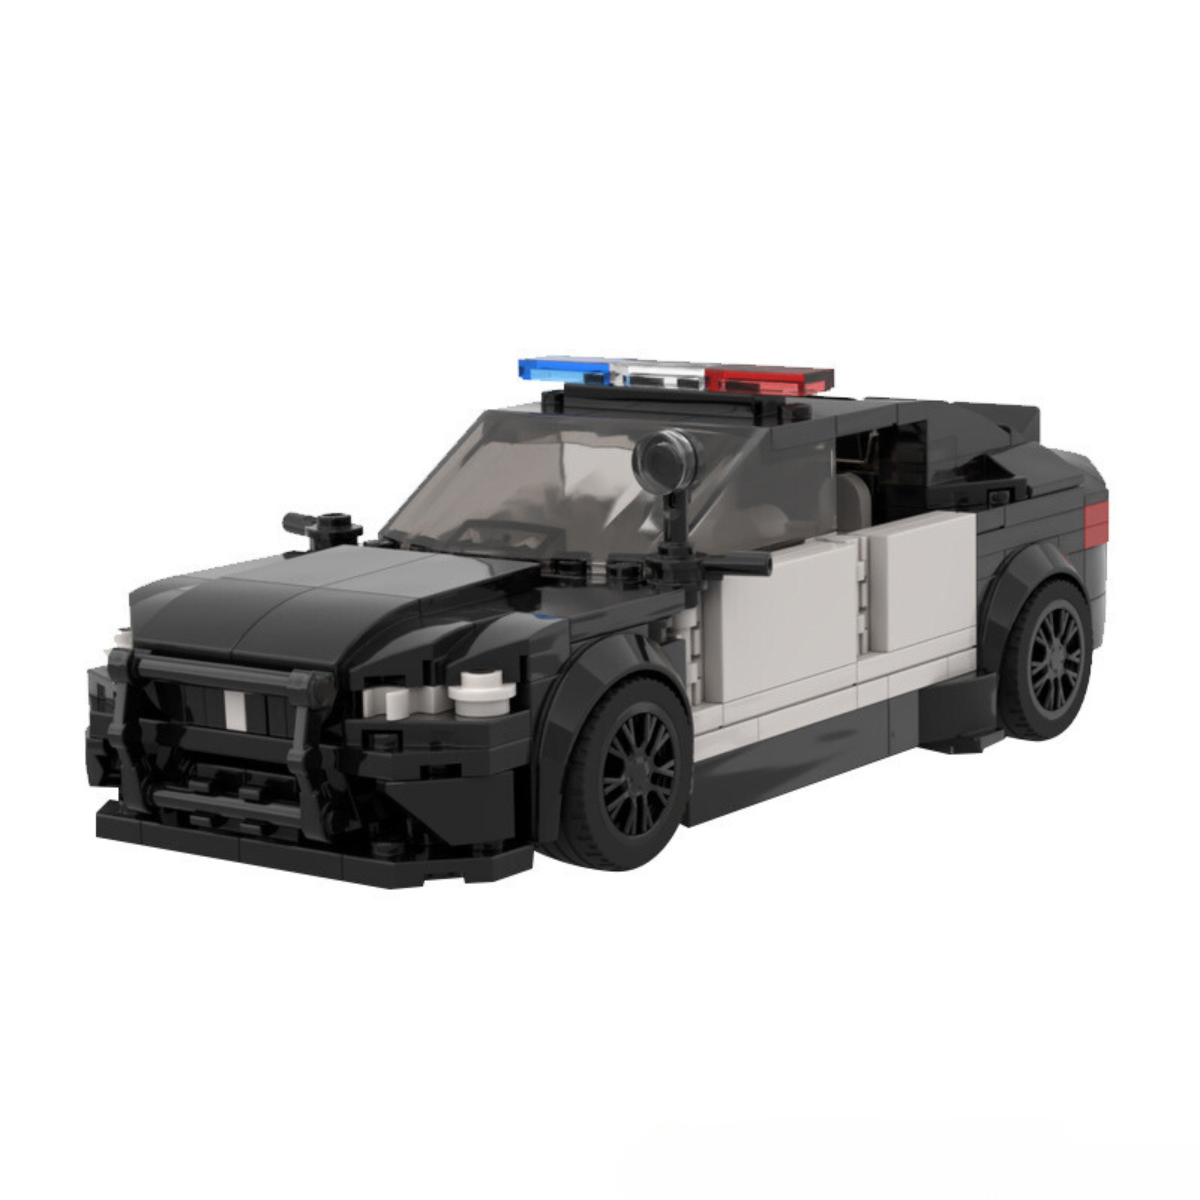 BMW M5 Police Car